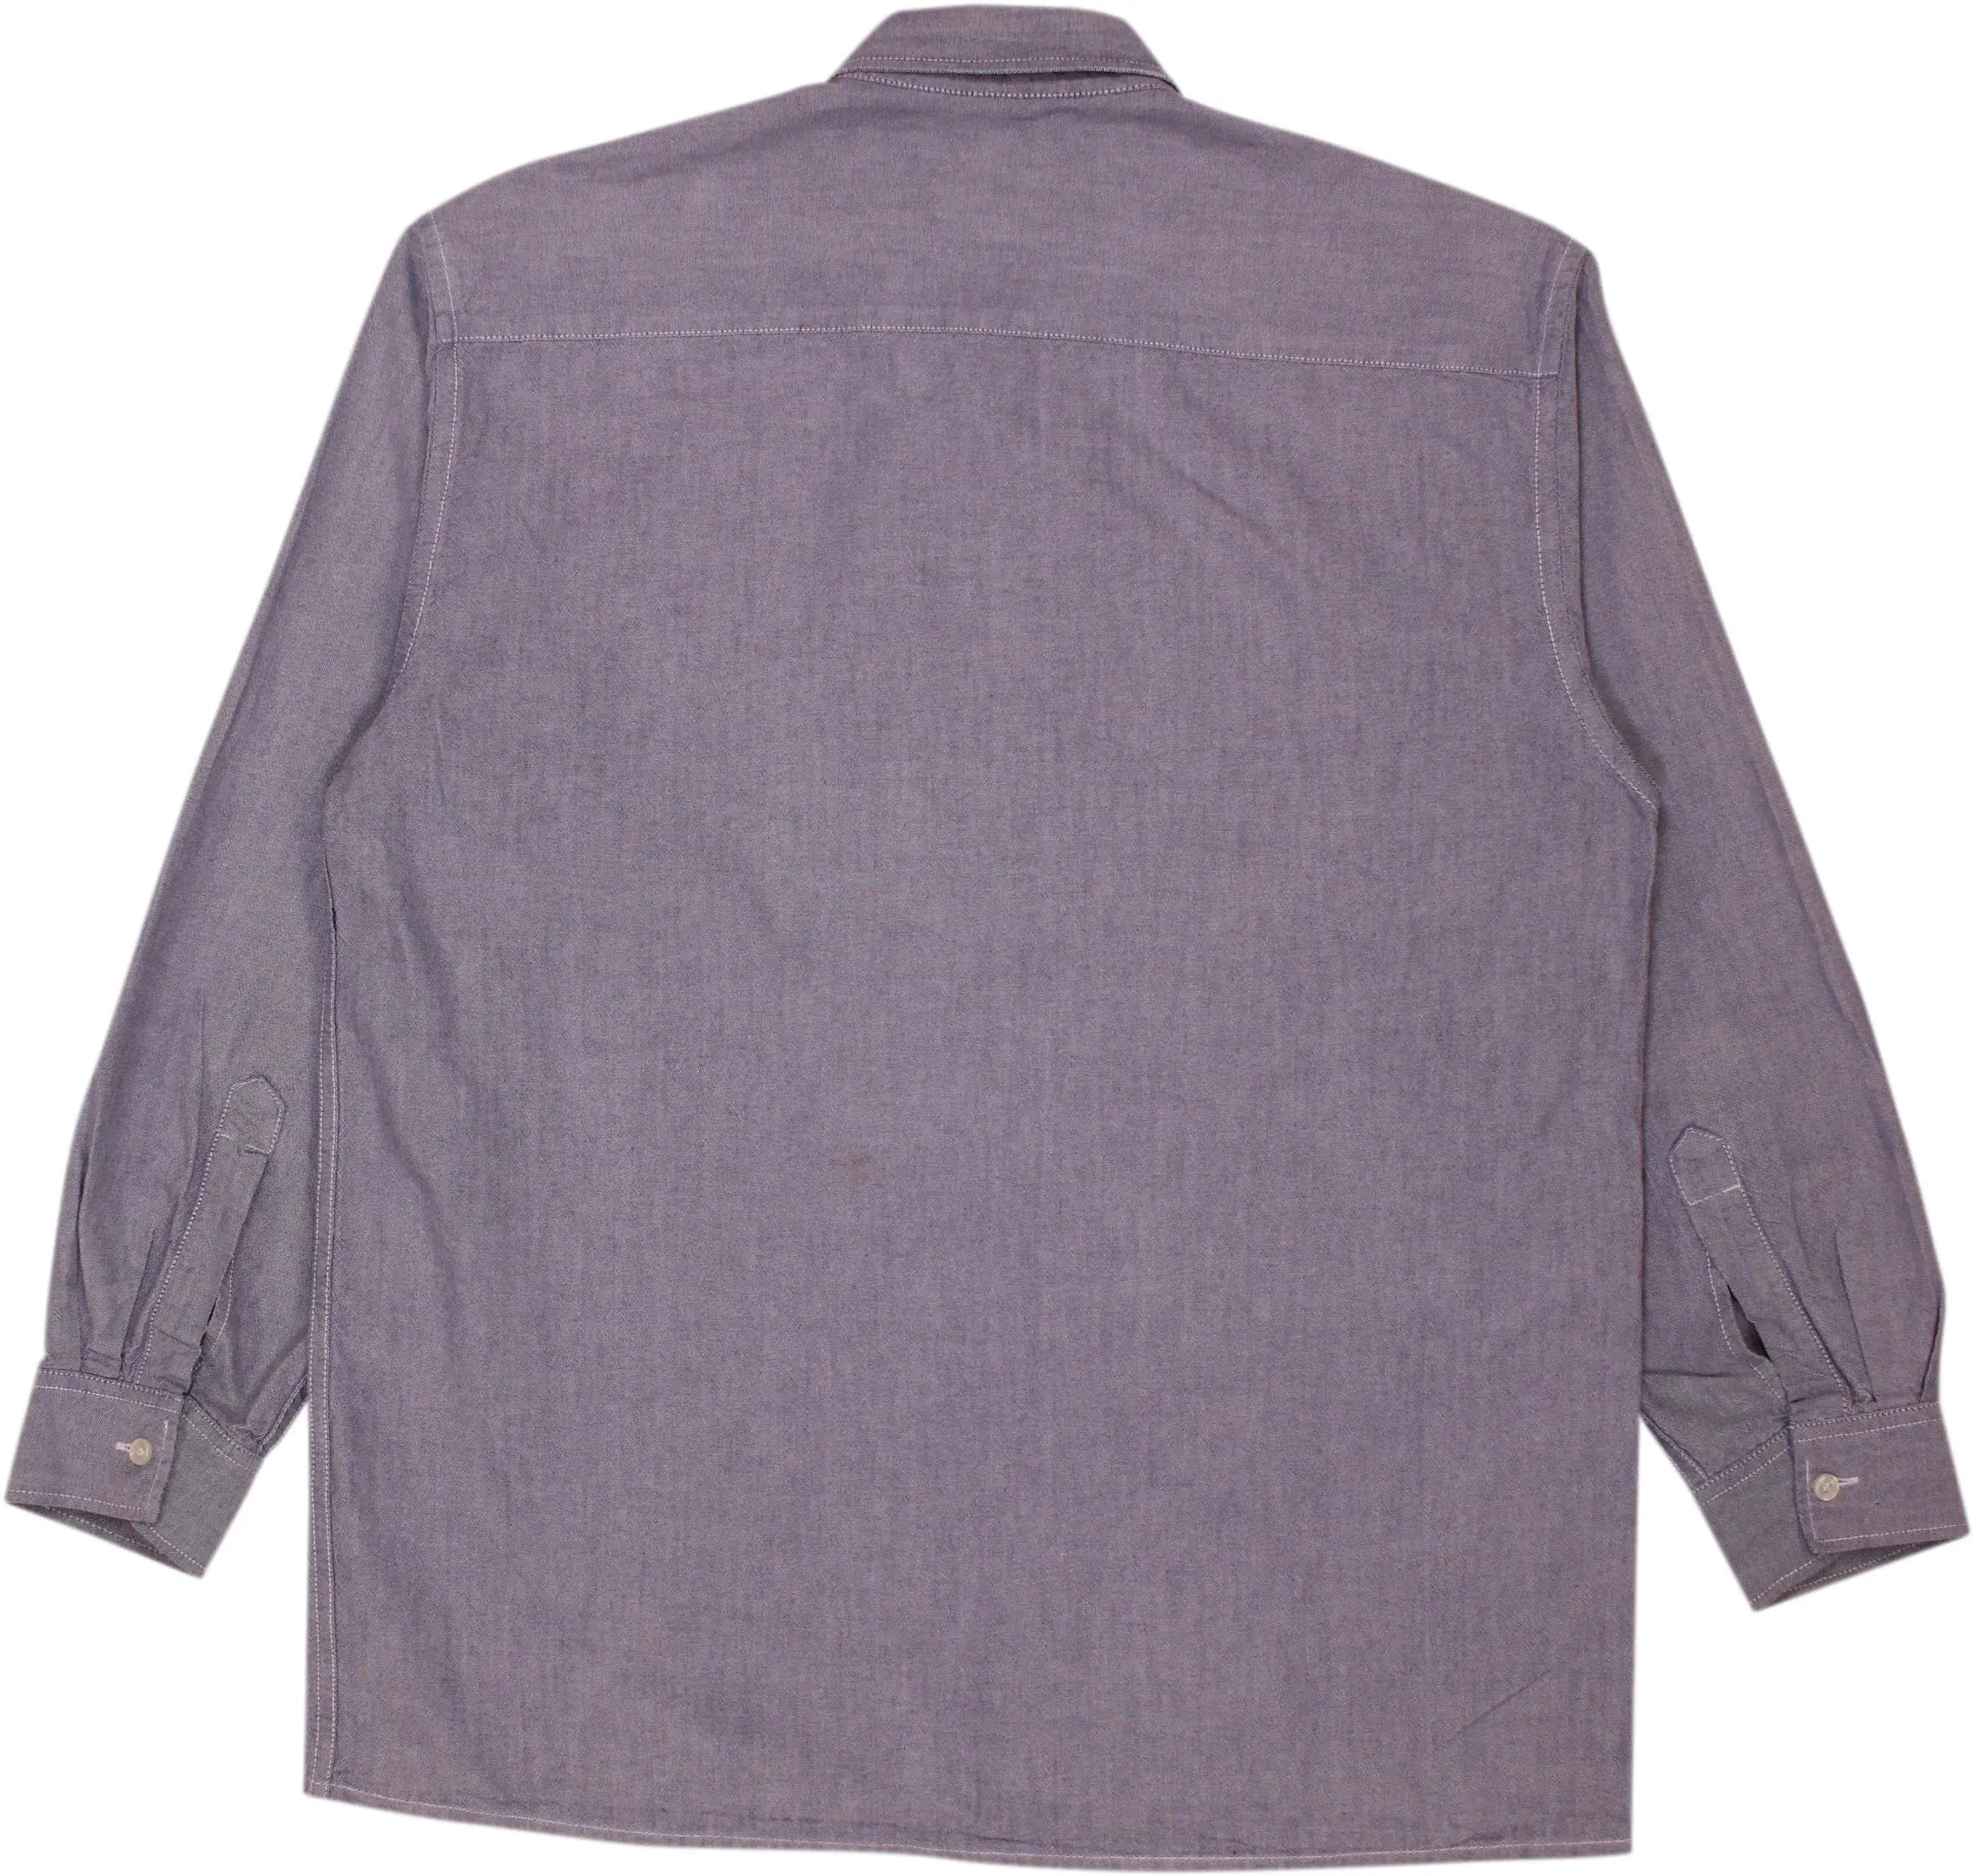 Levi's - Levi's Denim Shirt- ThriftTale.com - Vintage and second handclothing